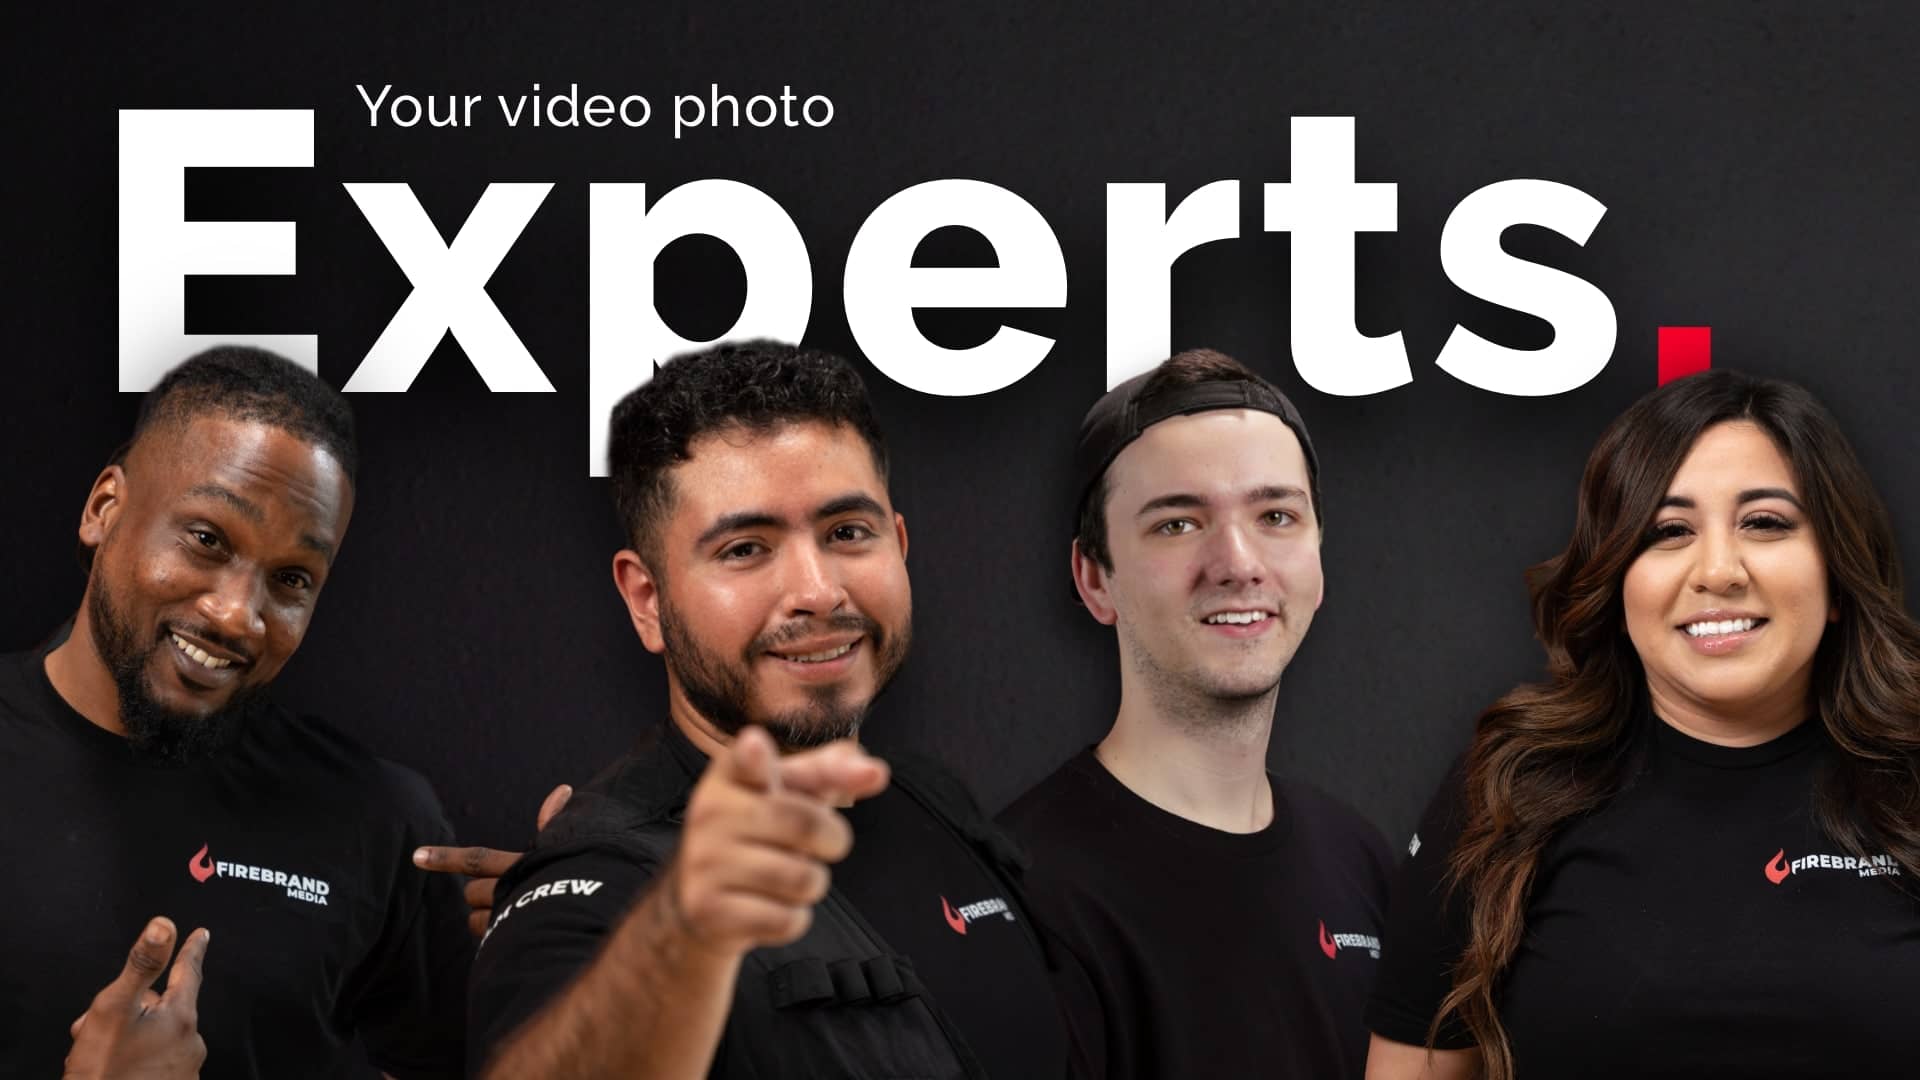 Dallas videographers at video production/marketing company